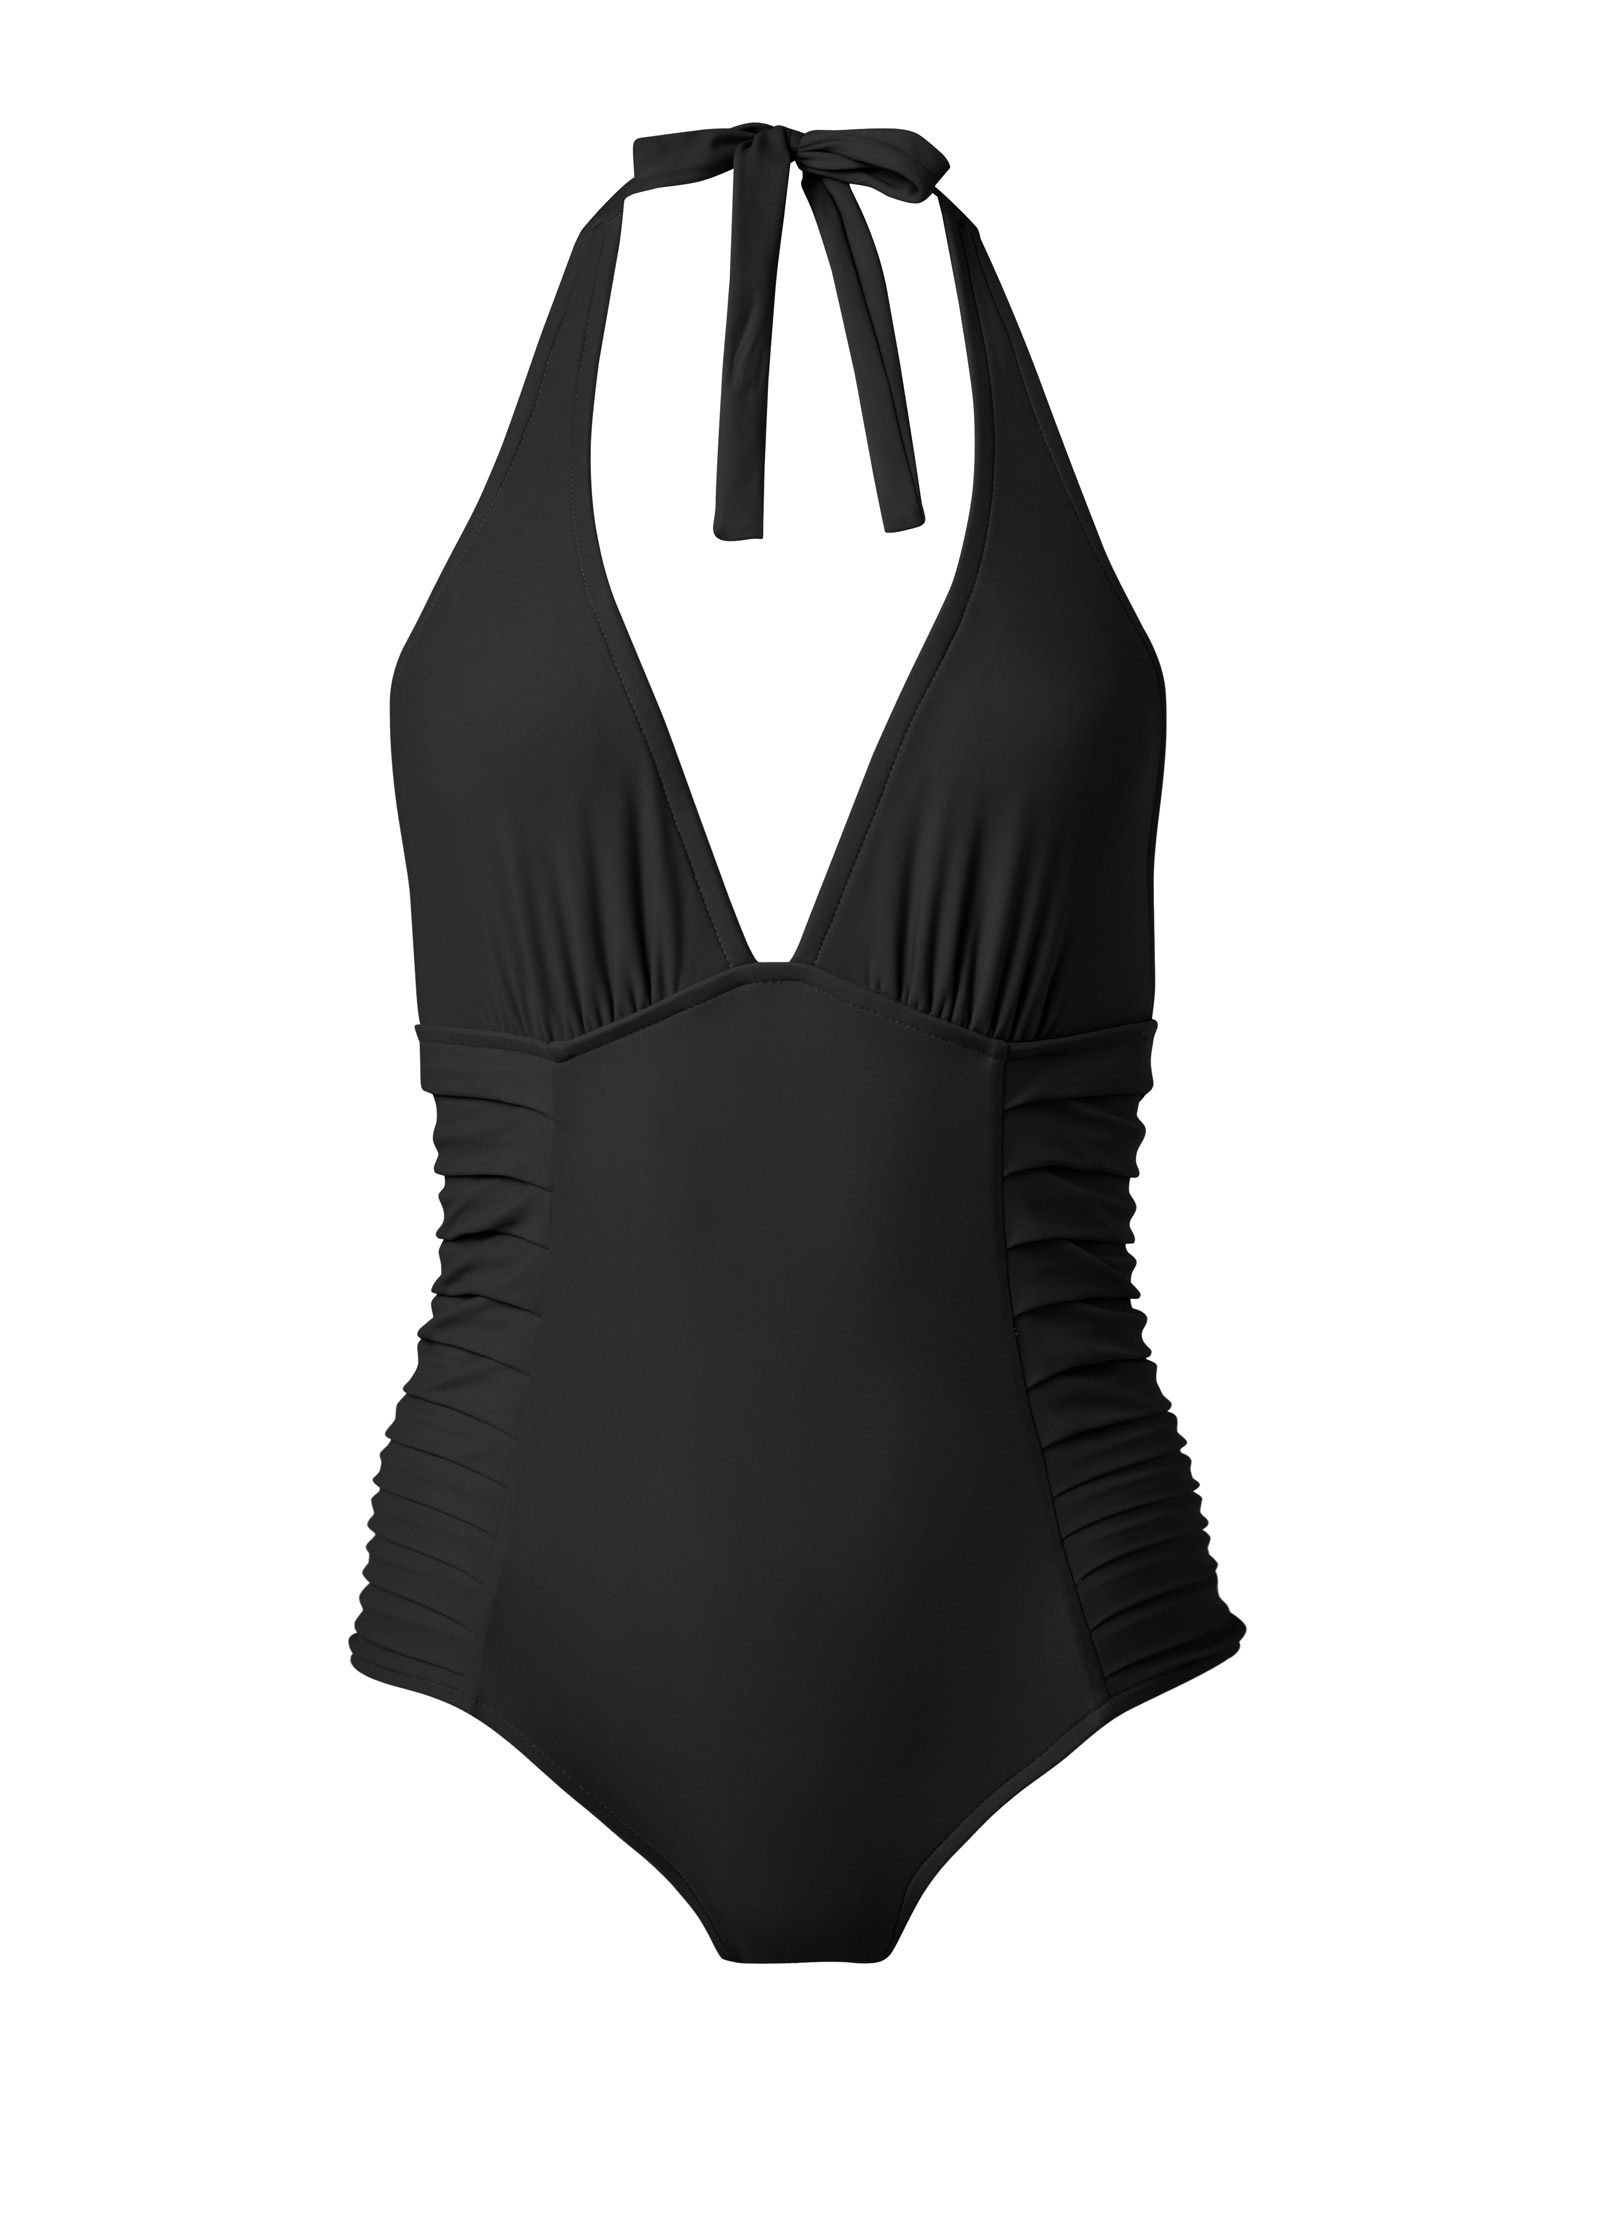 Peek-A-Boo Halter One-Piece Swimsuit in Black & White | VENUS